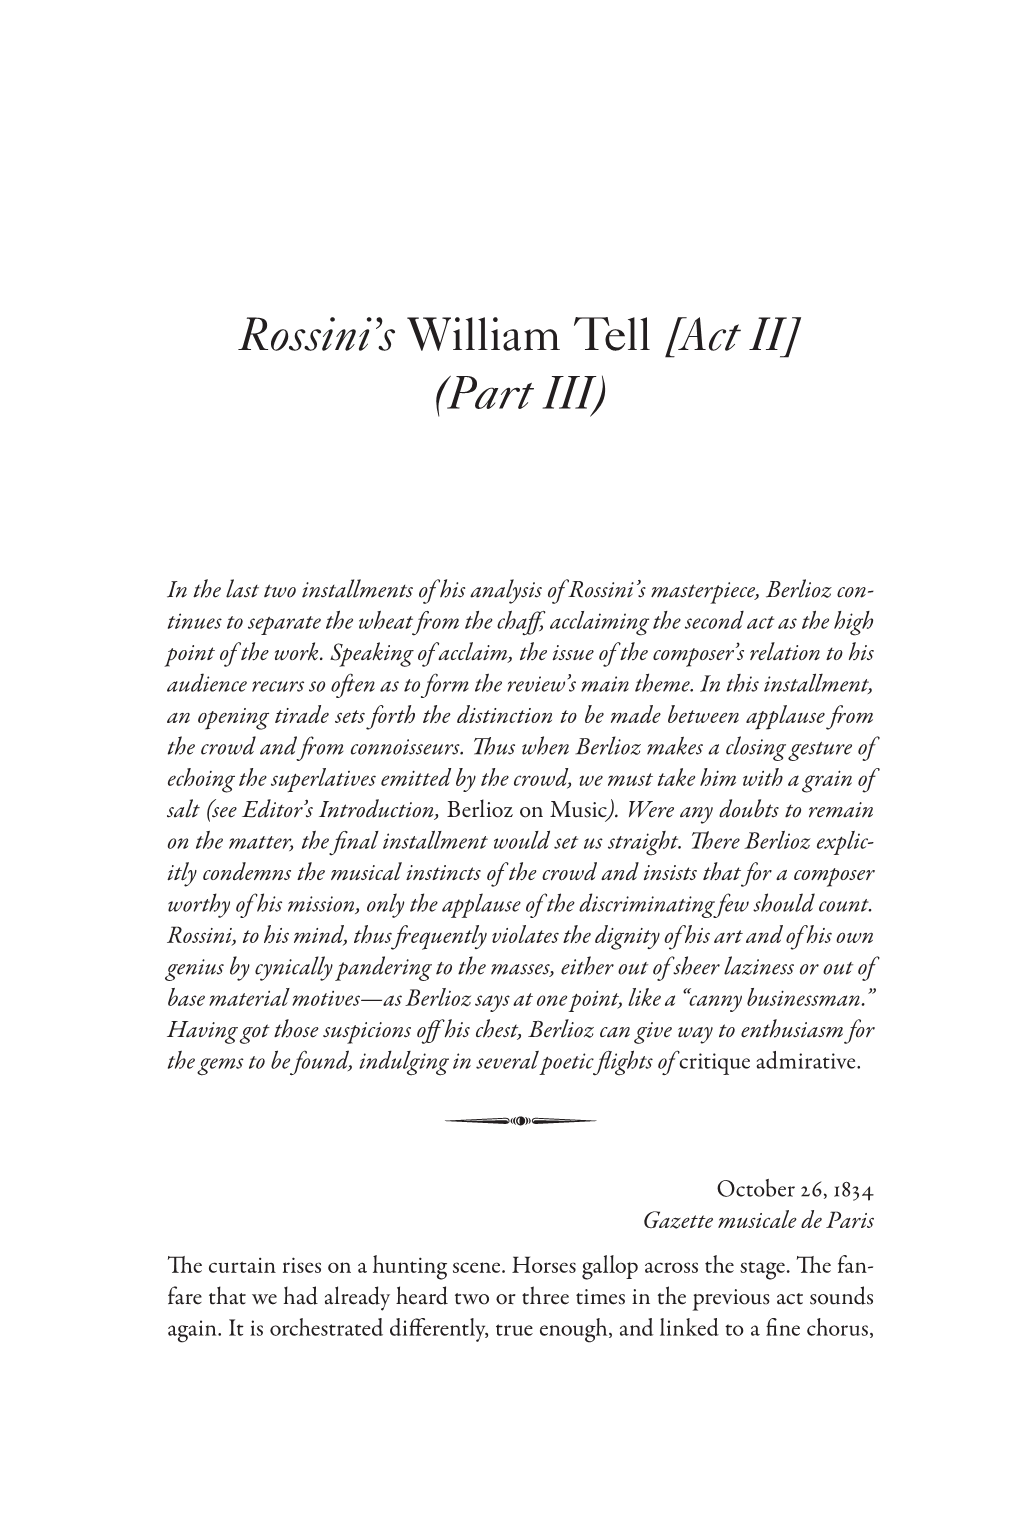 William Tell [Act II] (Part III)